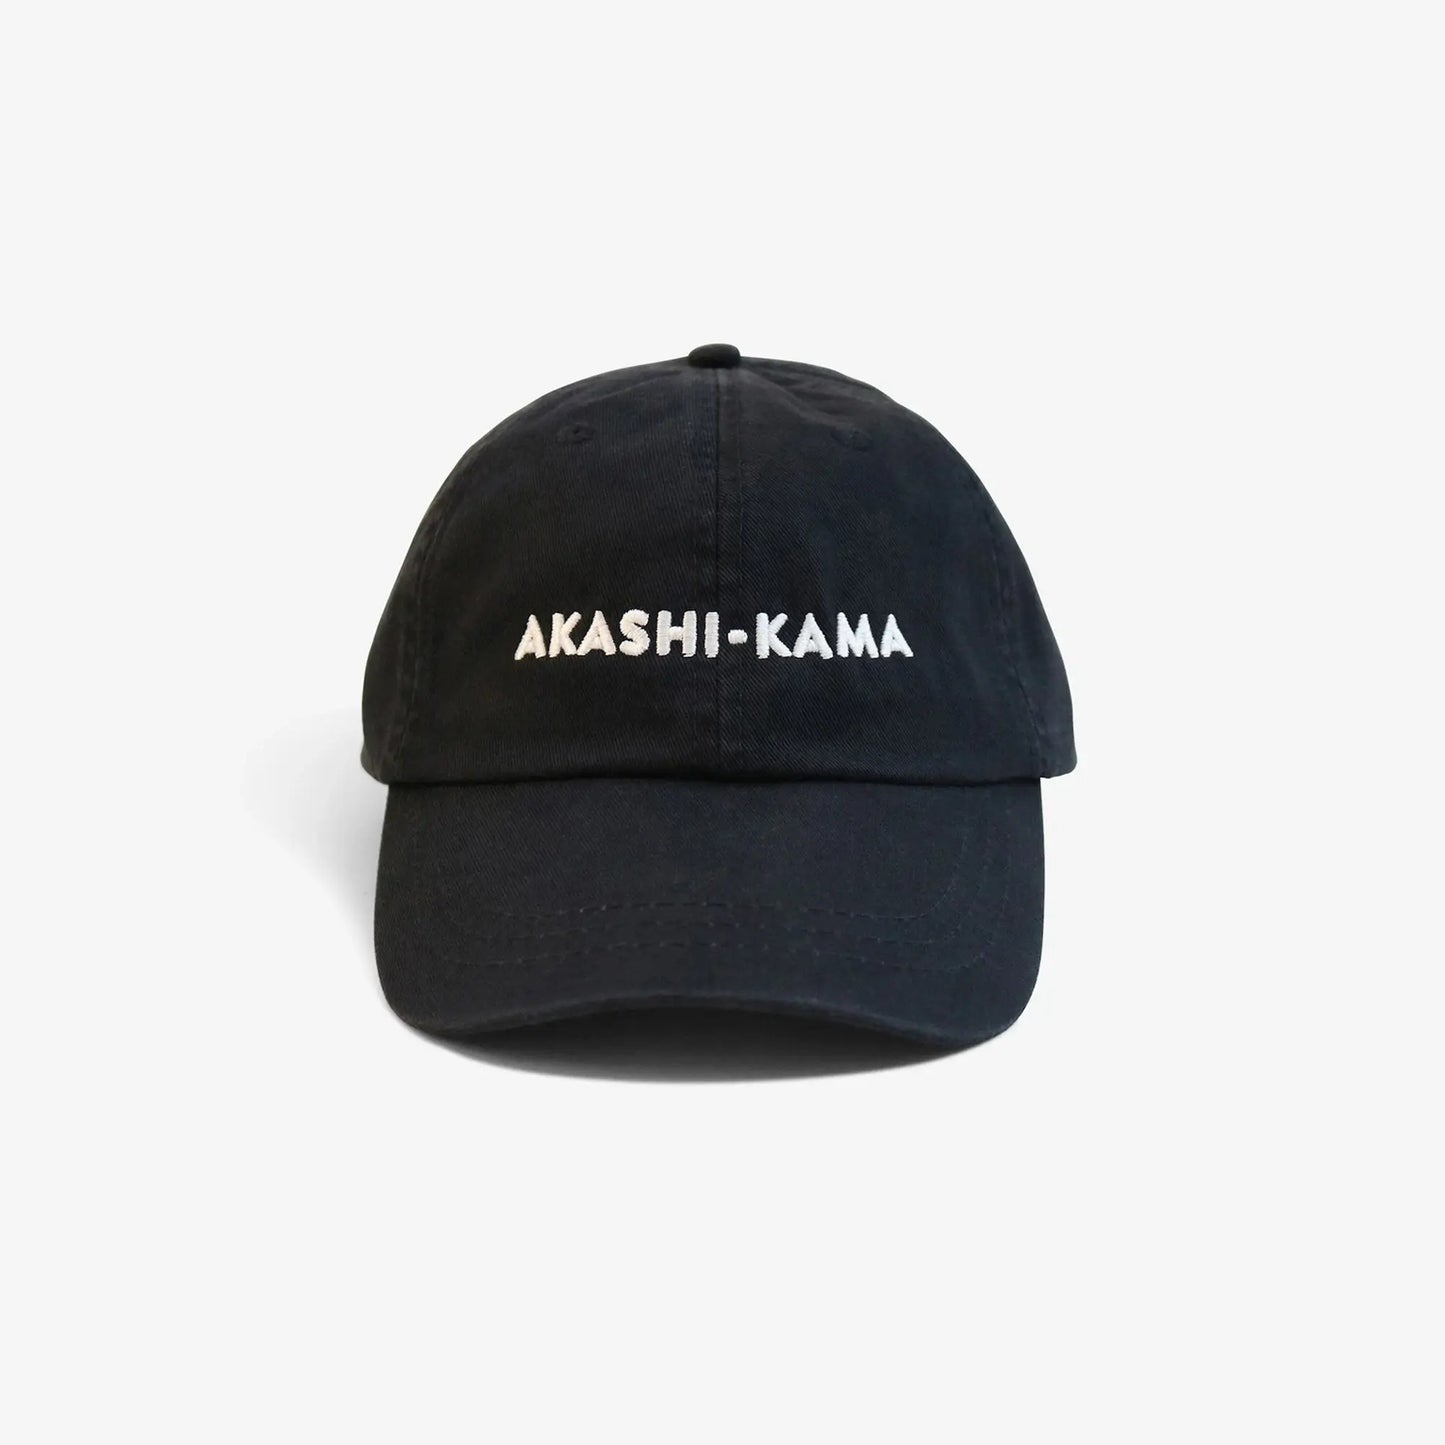 AKASHI-KAMA Logo Hat Black Design Cap